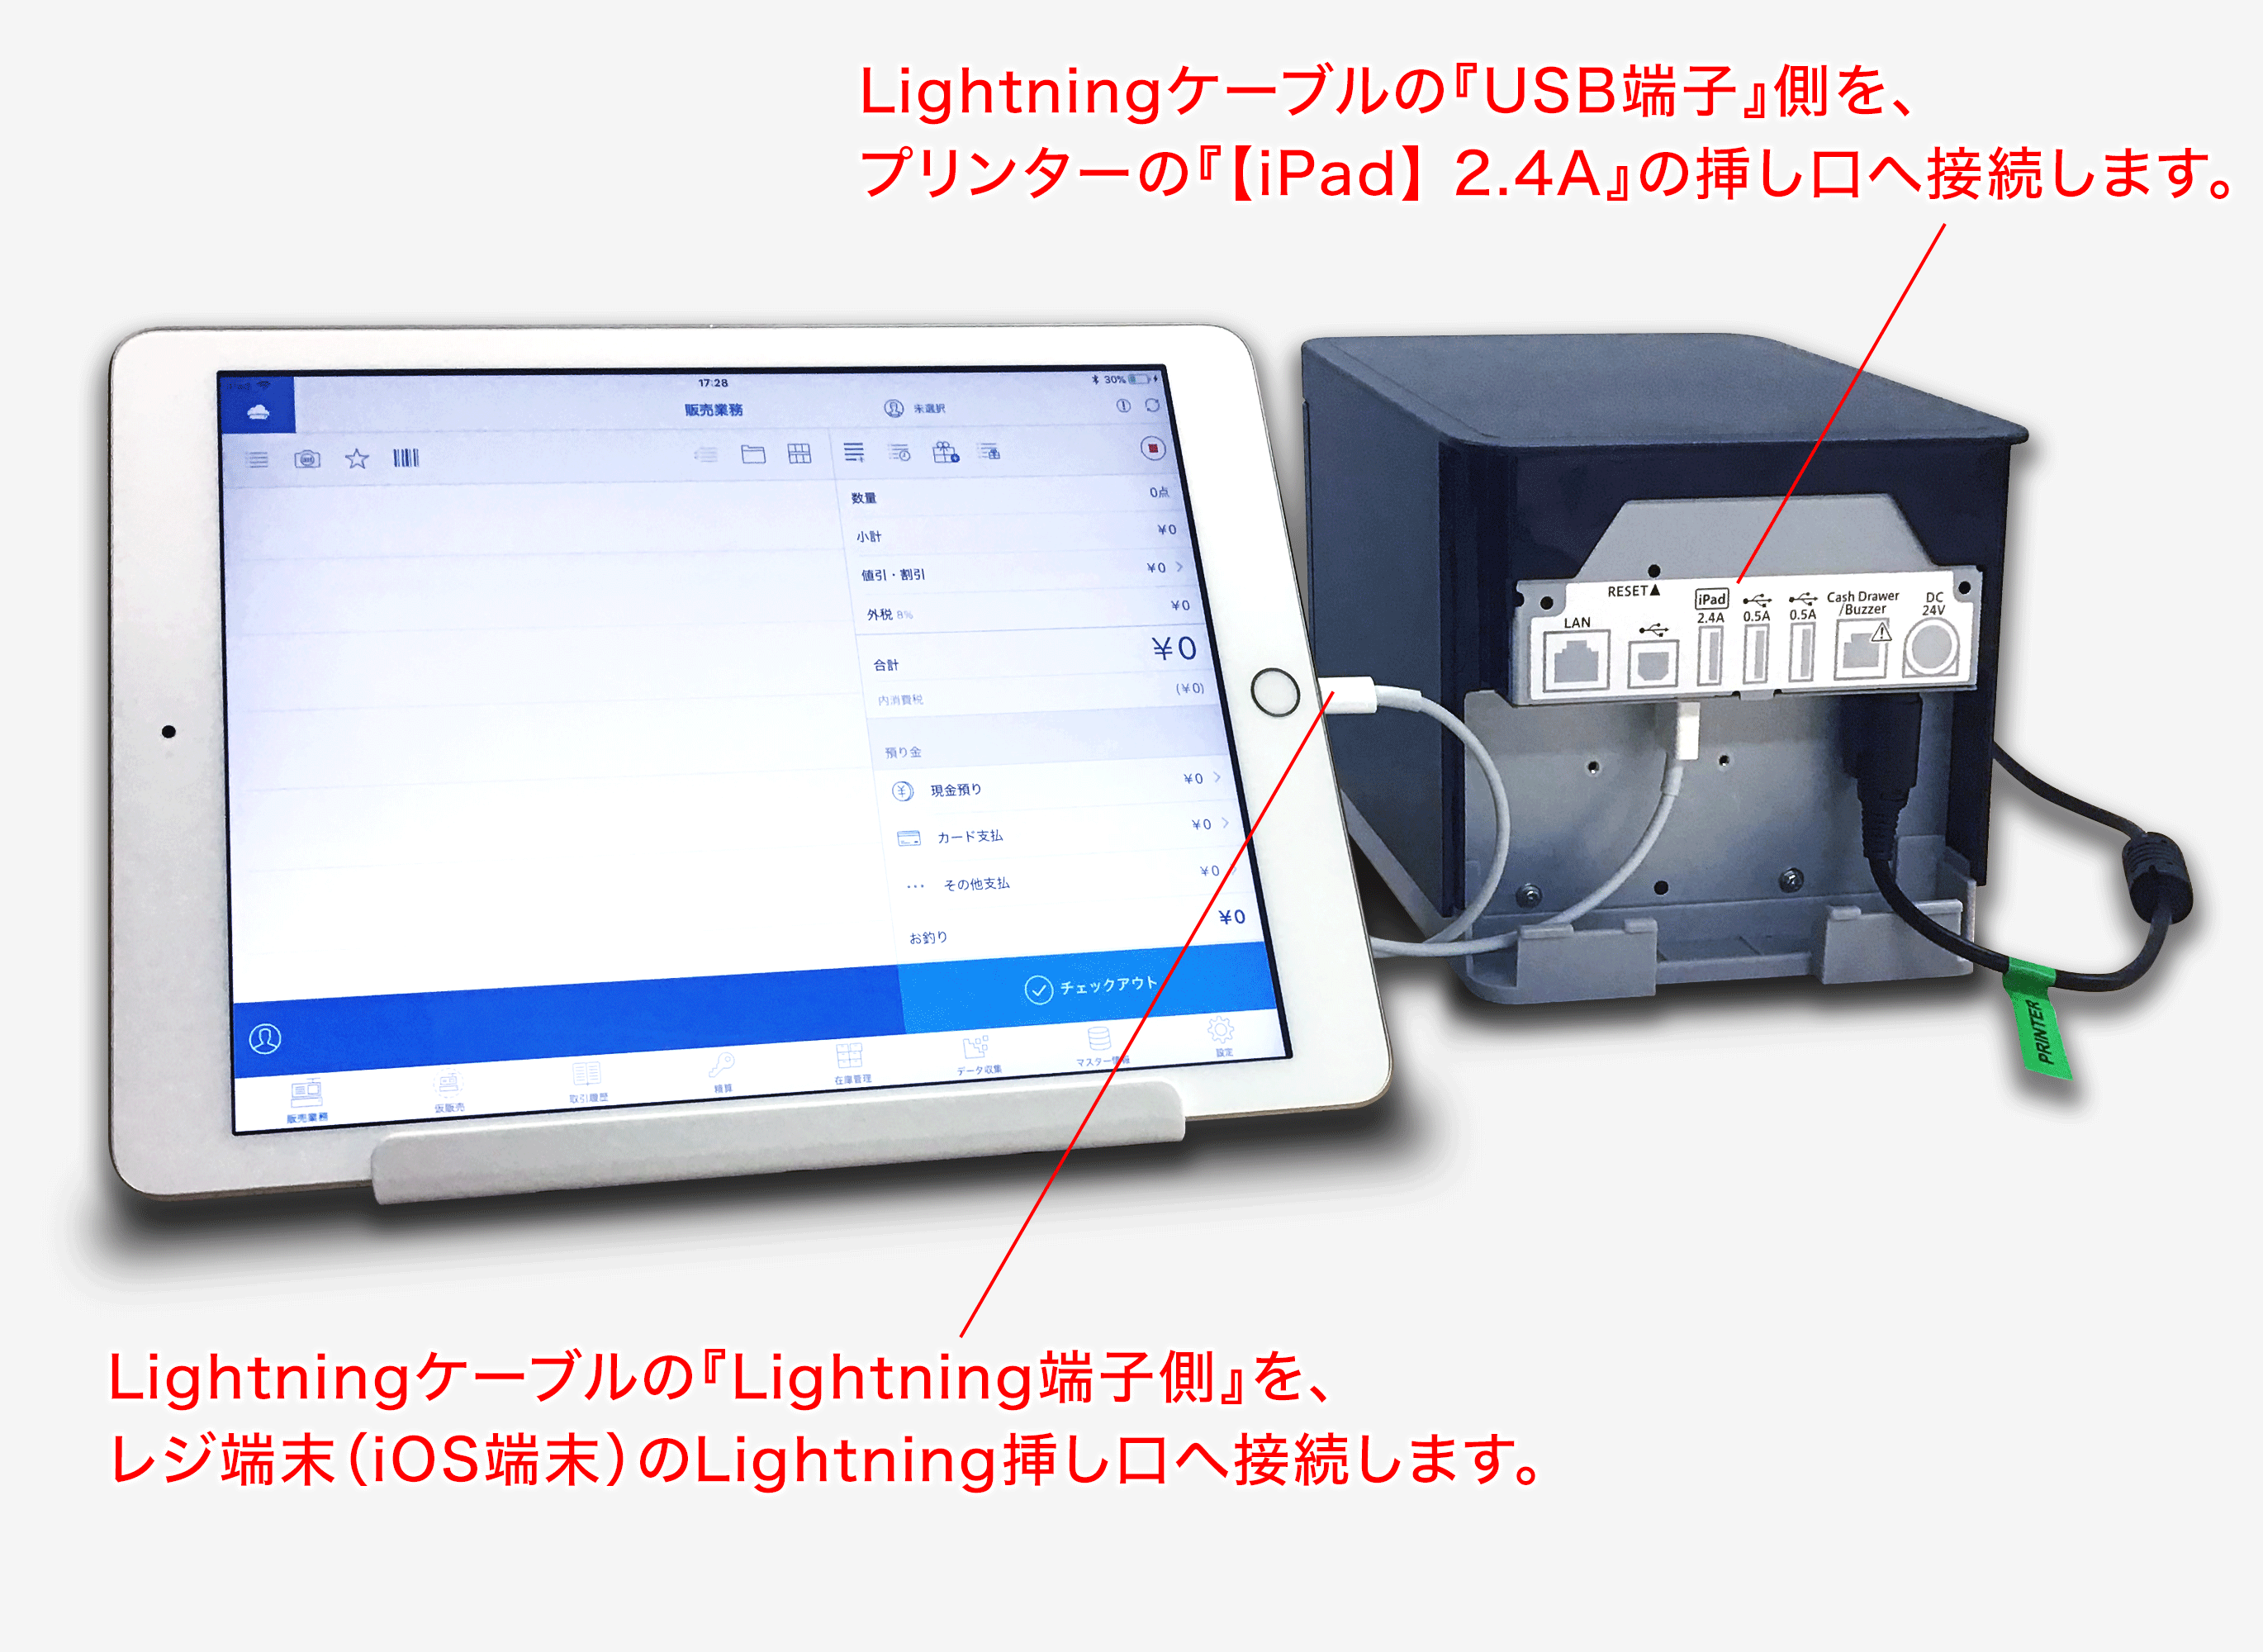 iPadレジプリンター mC-Print3